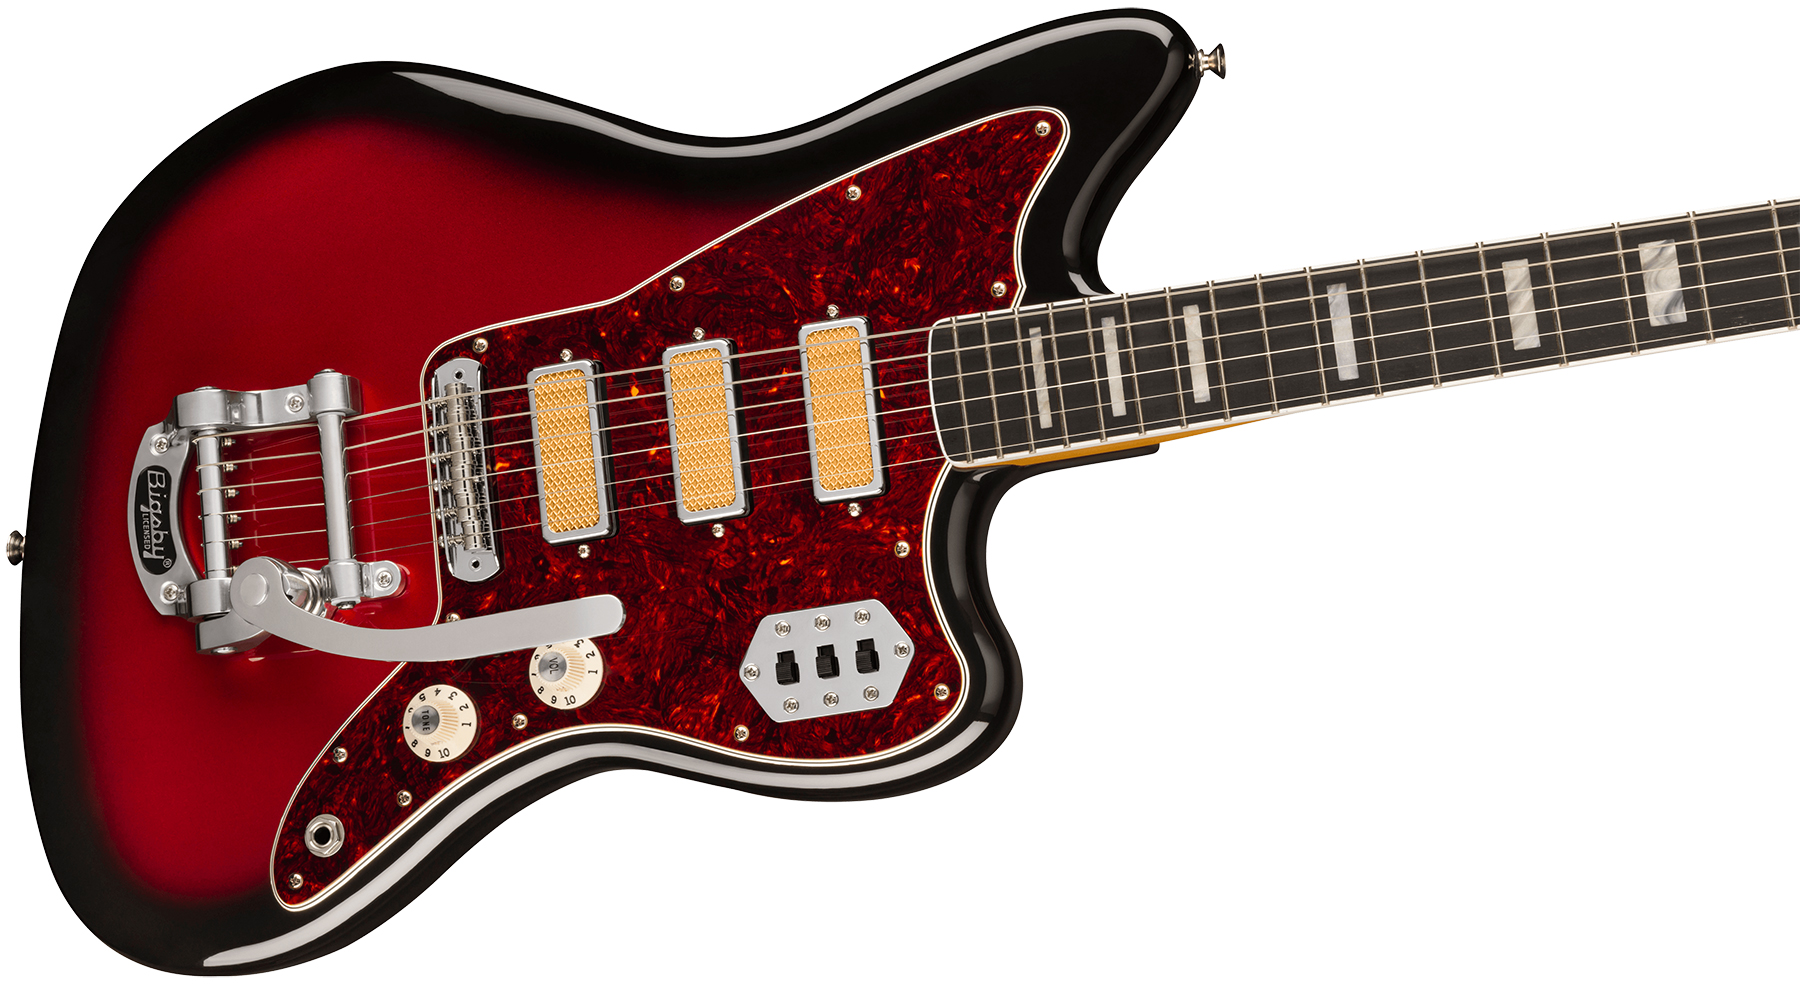 Fender Jazzmaster Gold Foil Ltd Mex 3mh Trem Bigsby Eb - Candy Apple Burst - Retro-rock elektrische gitaar - Variation 2